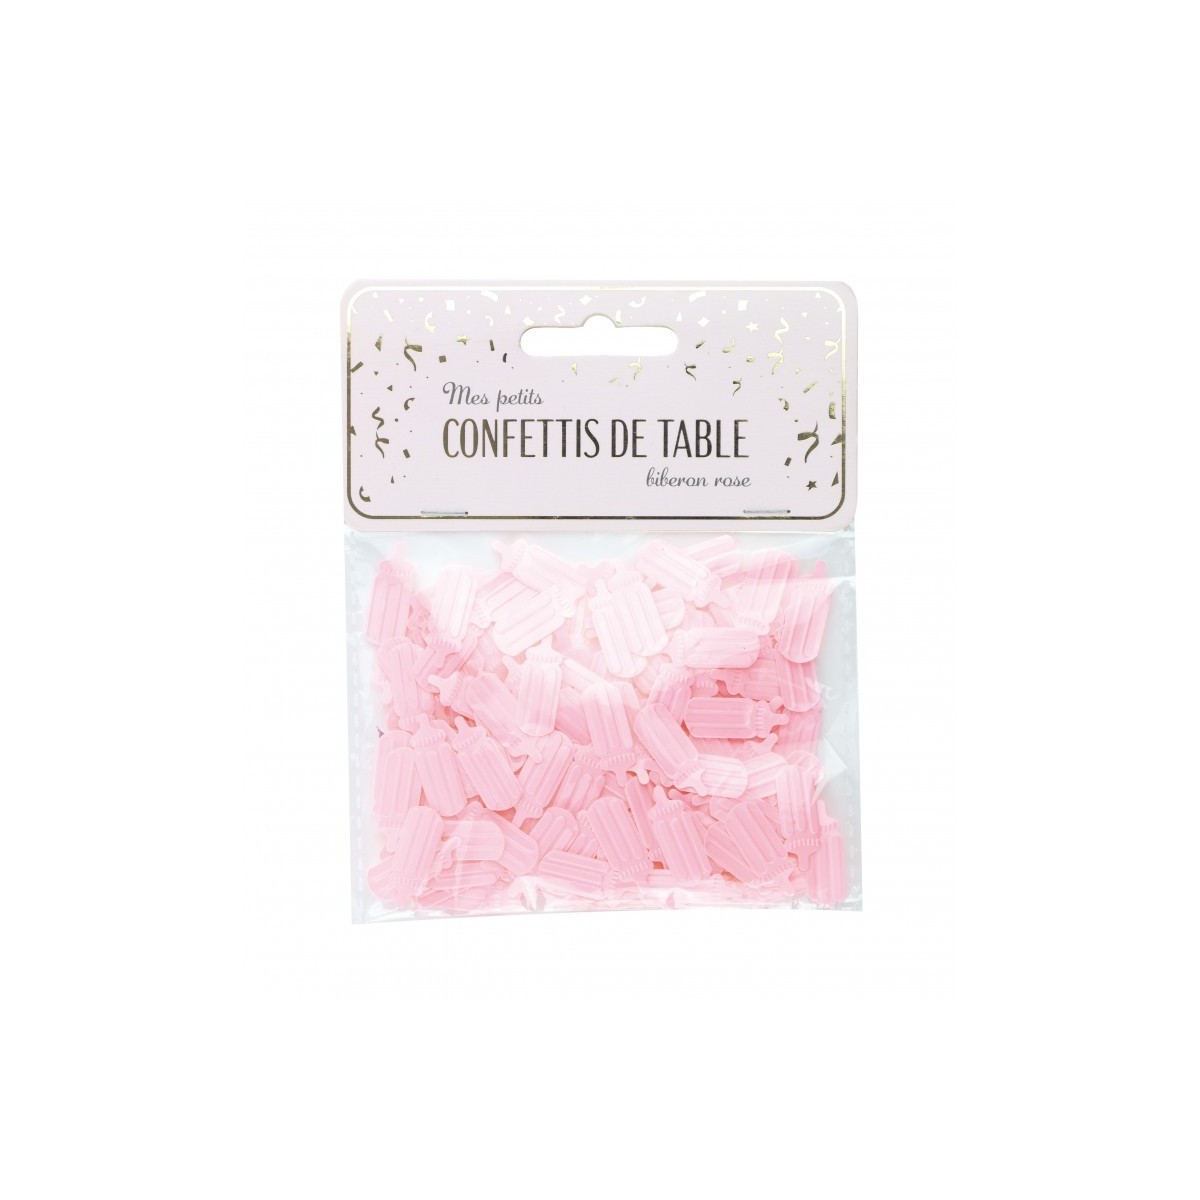 Confettis de table étoiles Biberon rose